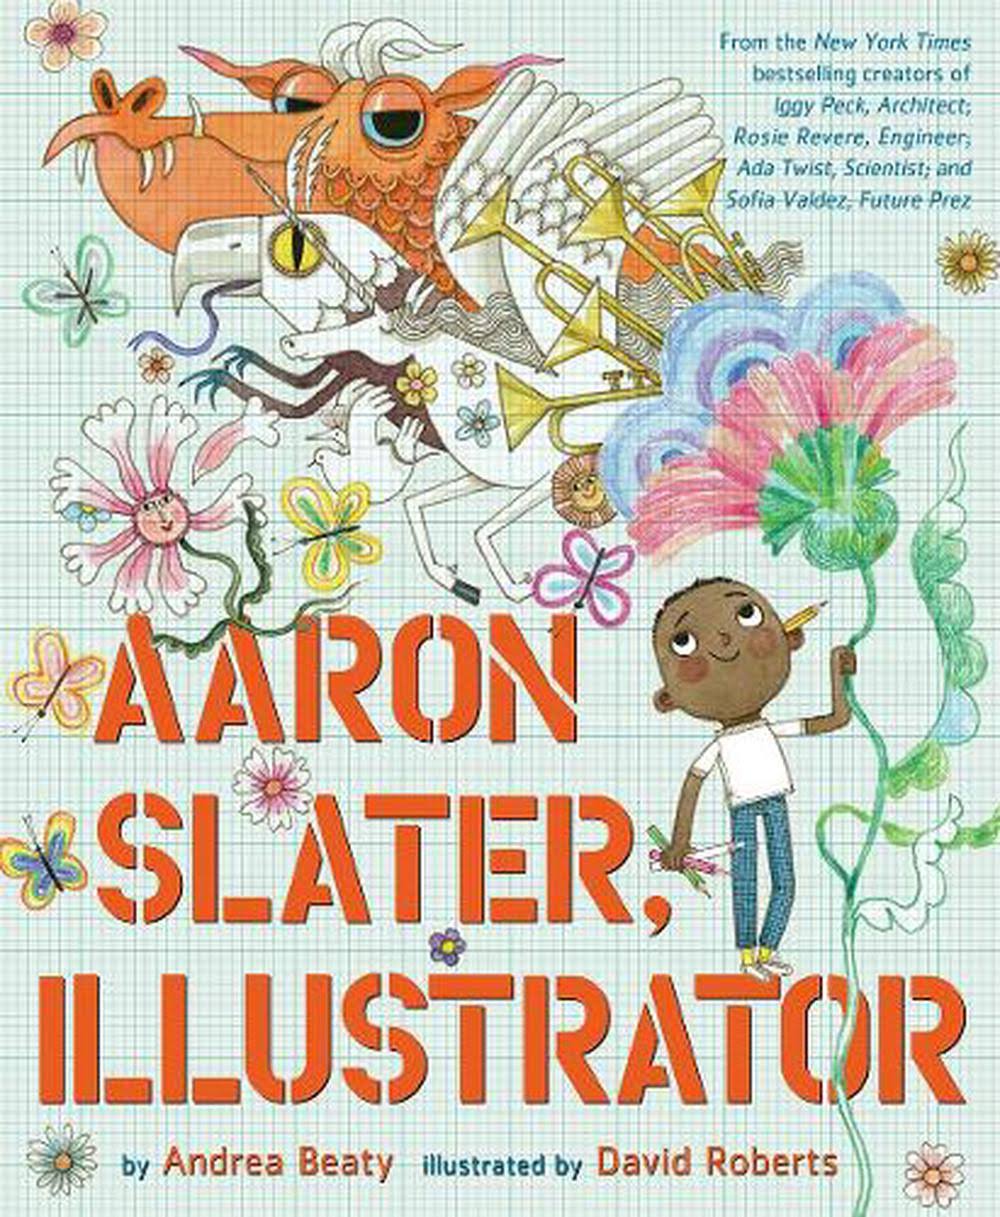 Aaron Slater Illustrator by Andrea Beaty